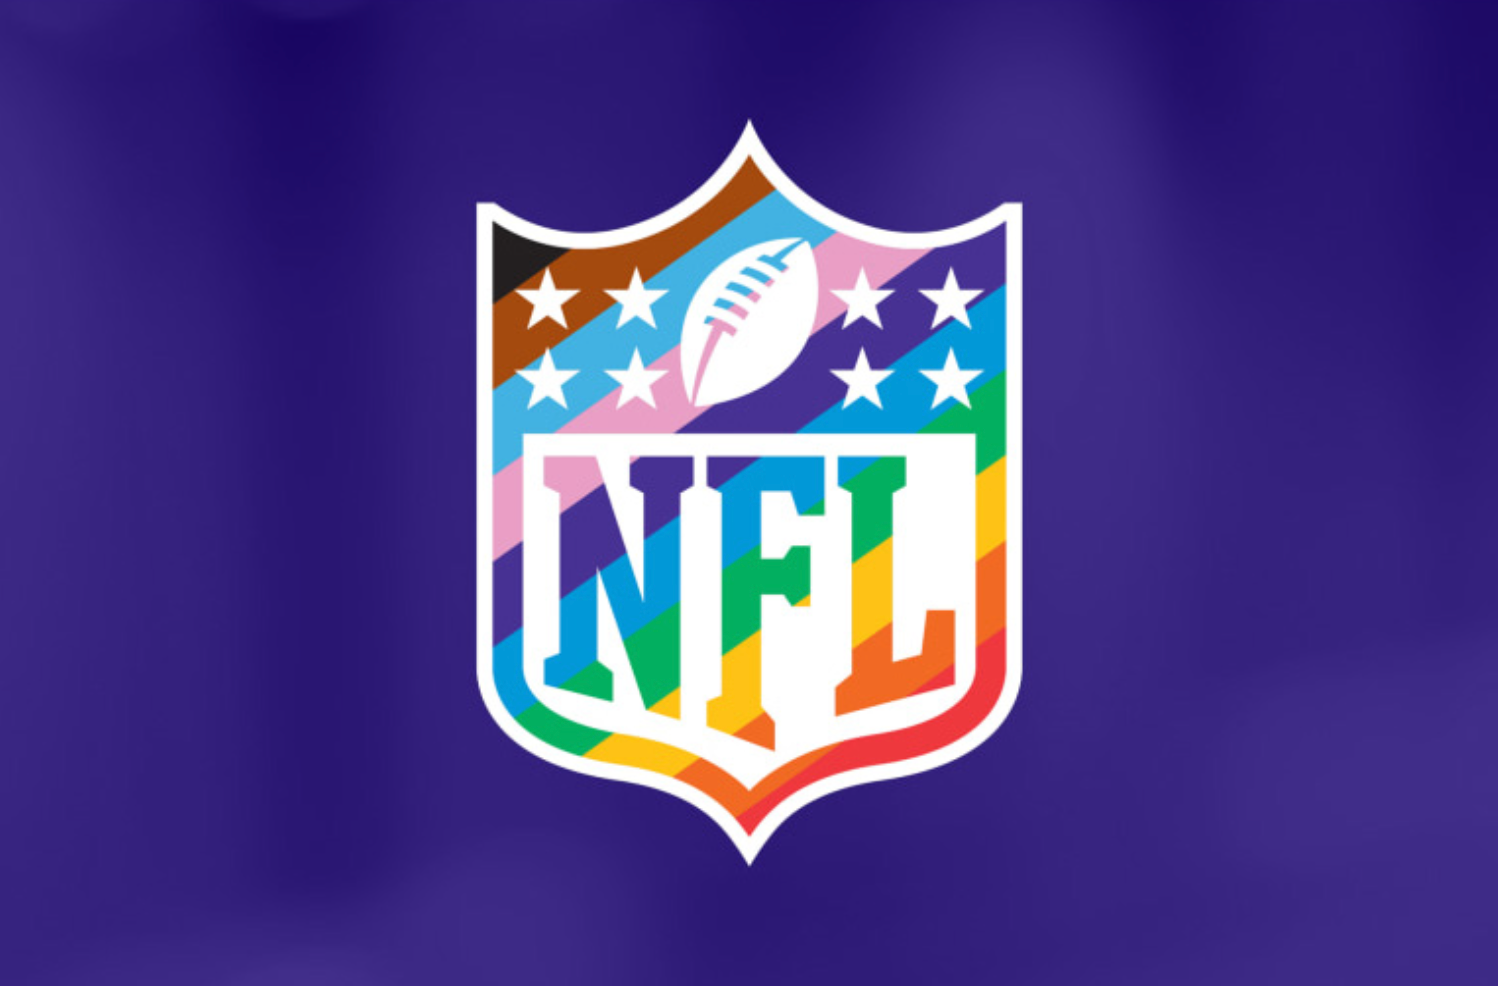 NFL pride flag